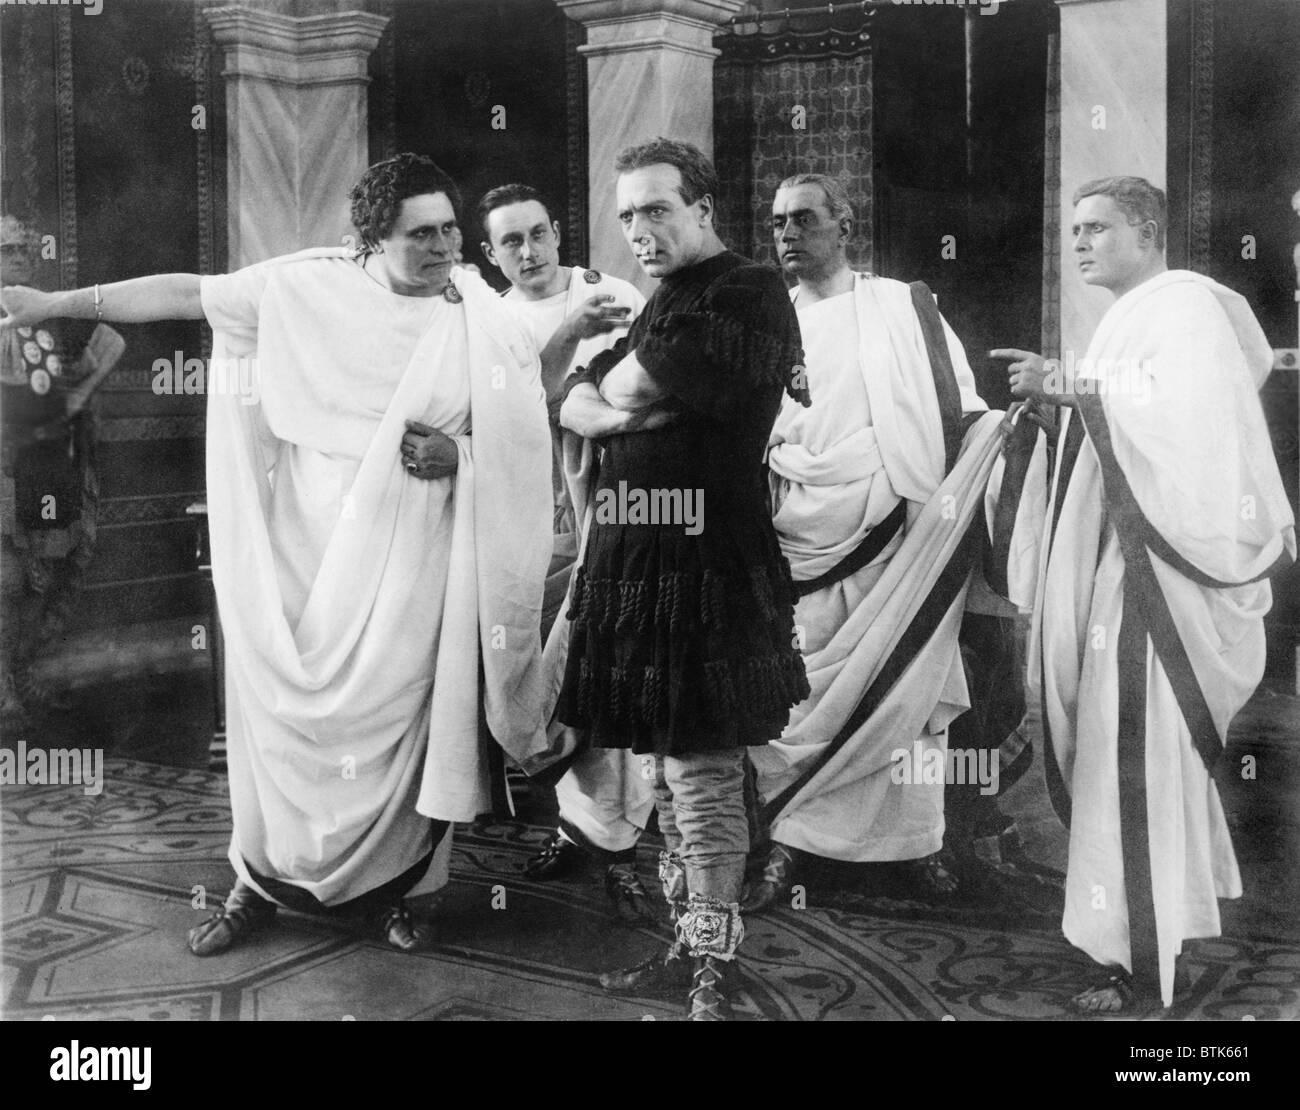 Amleto (Anthony) Novelli (1885-1924), Italian actor in a movie still from JULIUS CAESAR, 1914. Scene shows Novelli, as Caesar, surrounded by four Roman senators. Stock Photo